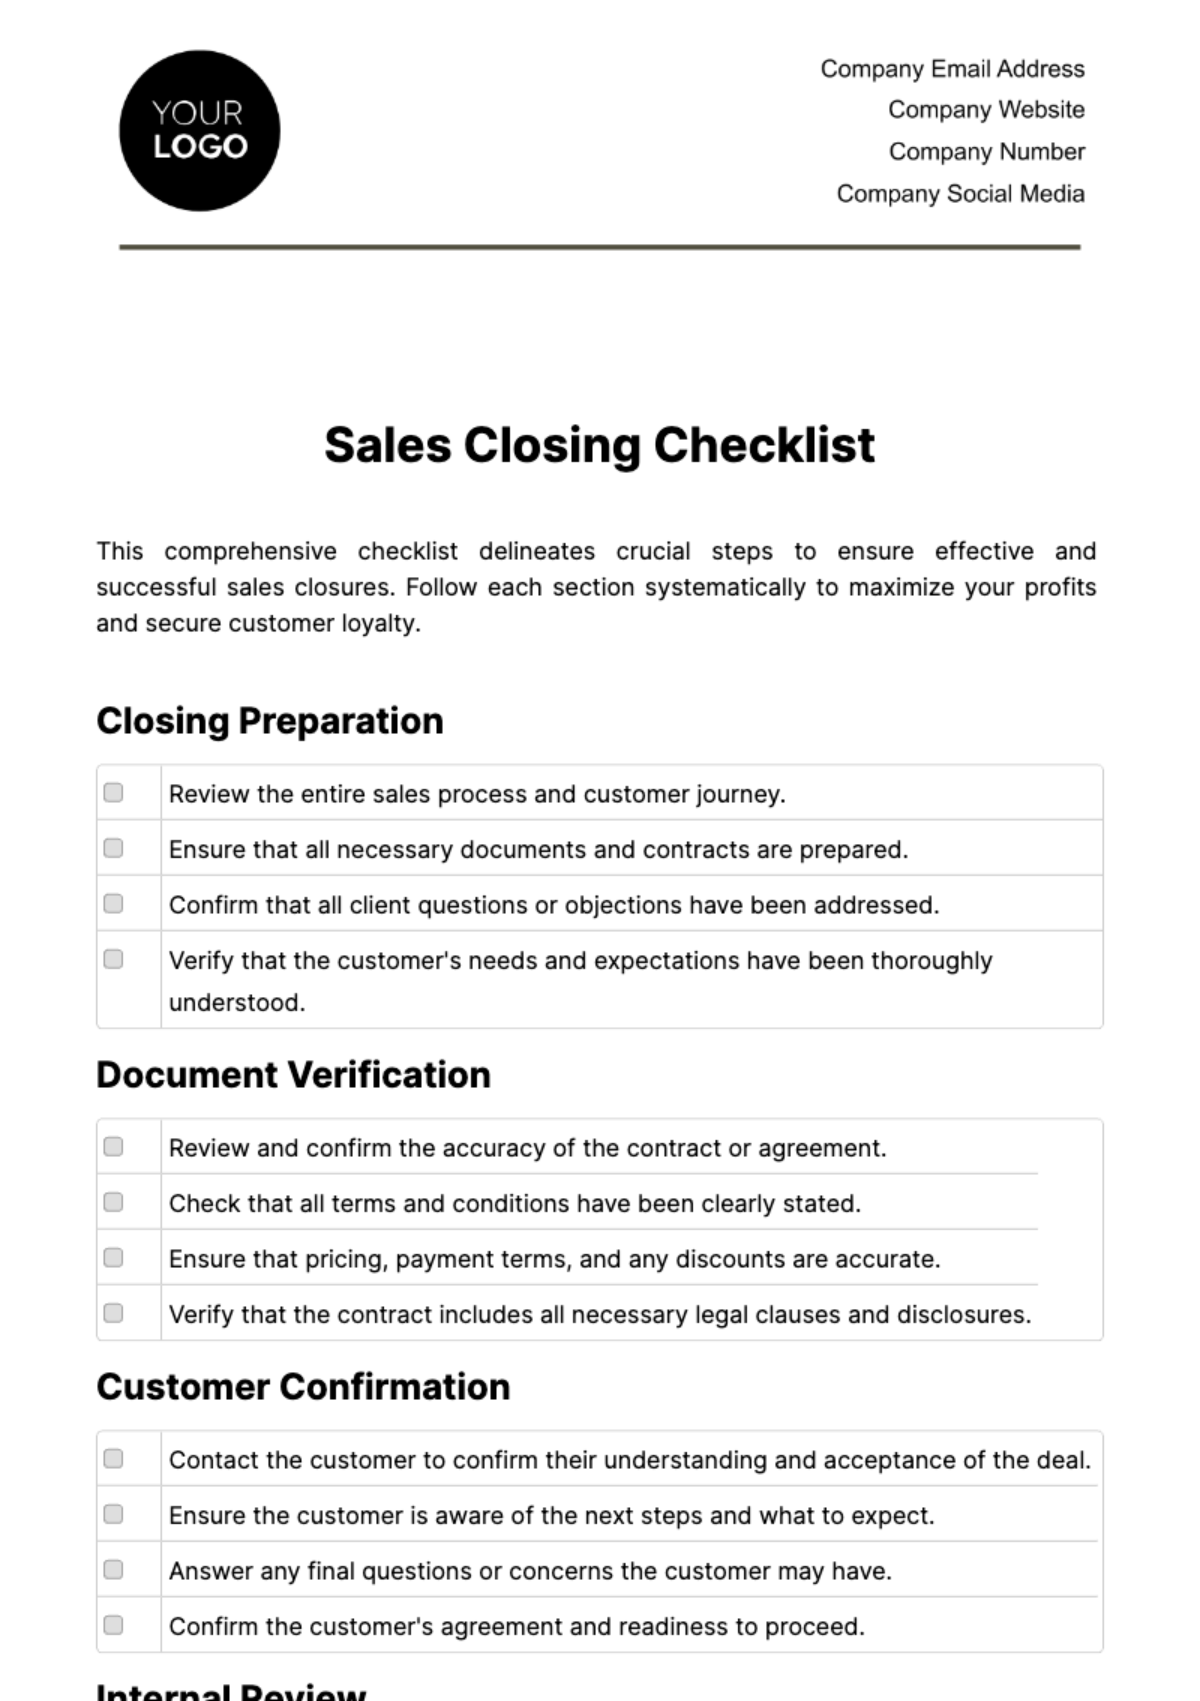 Free Sales Closing Checklist Template